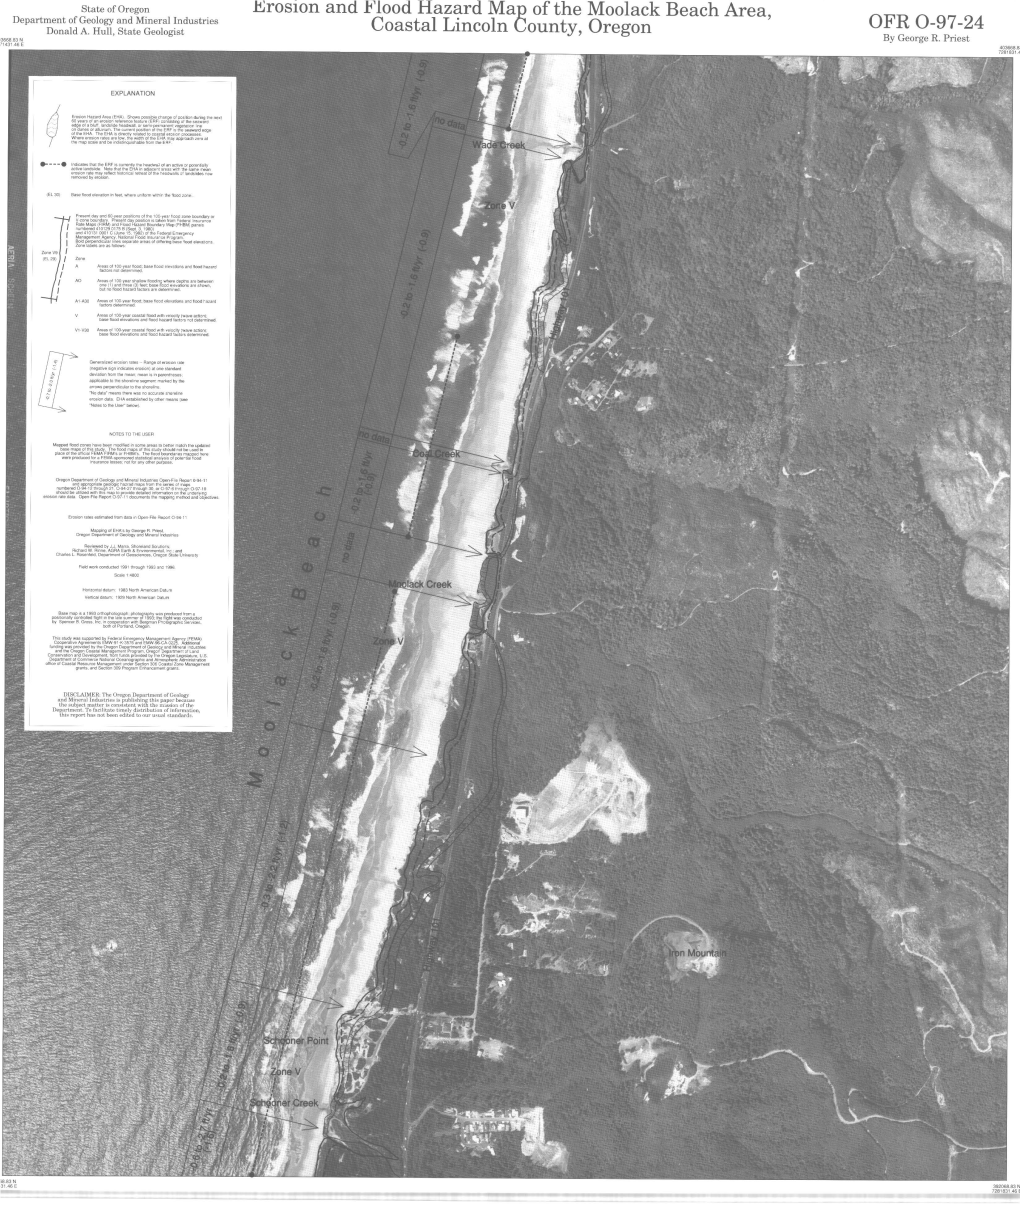 Erosion and Flood Hazard Map of the Moolack Beach Area, Coastal